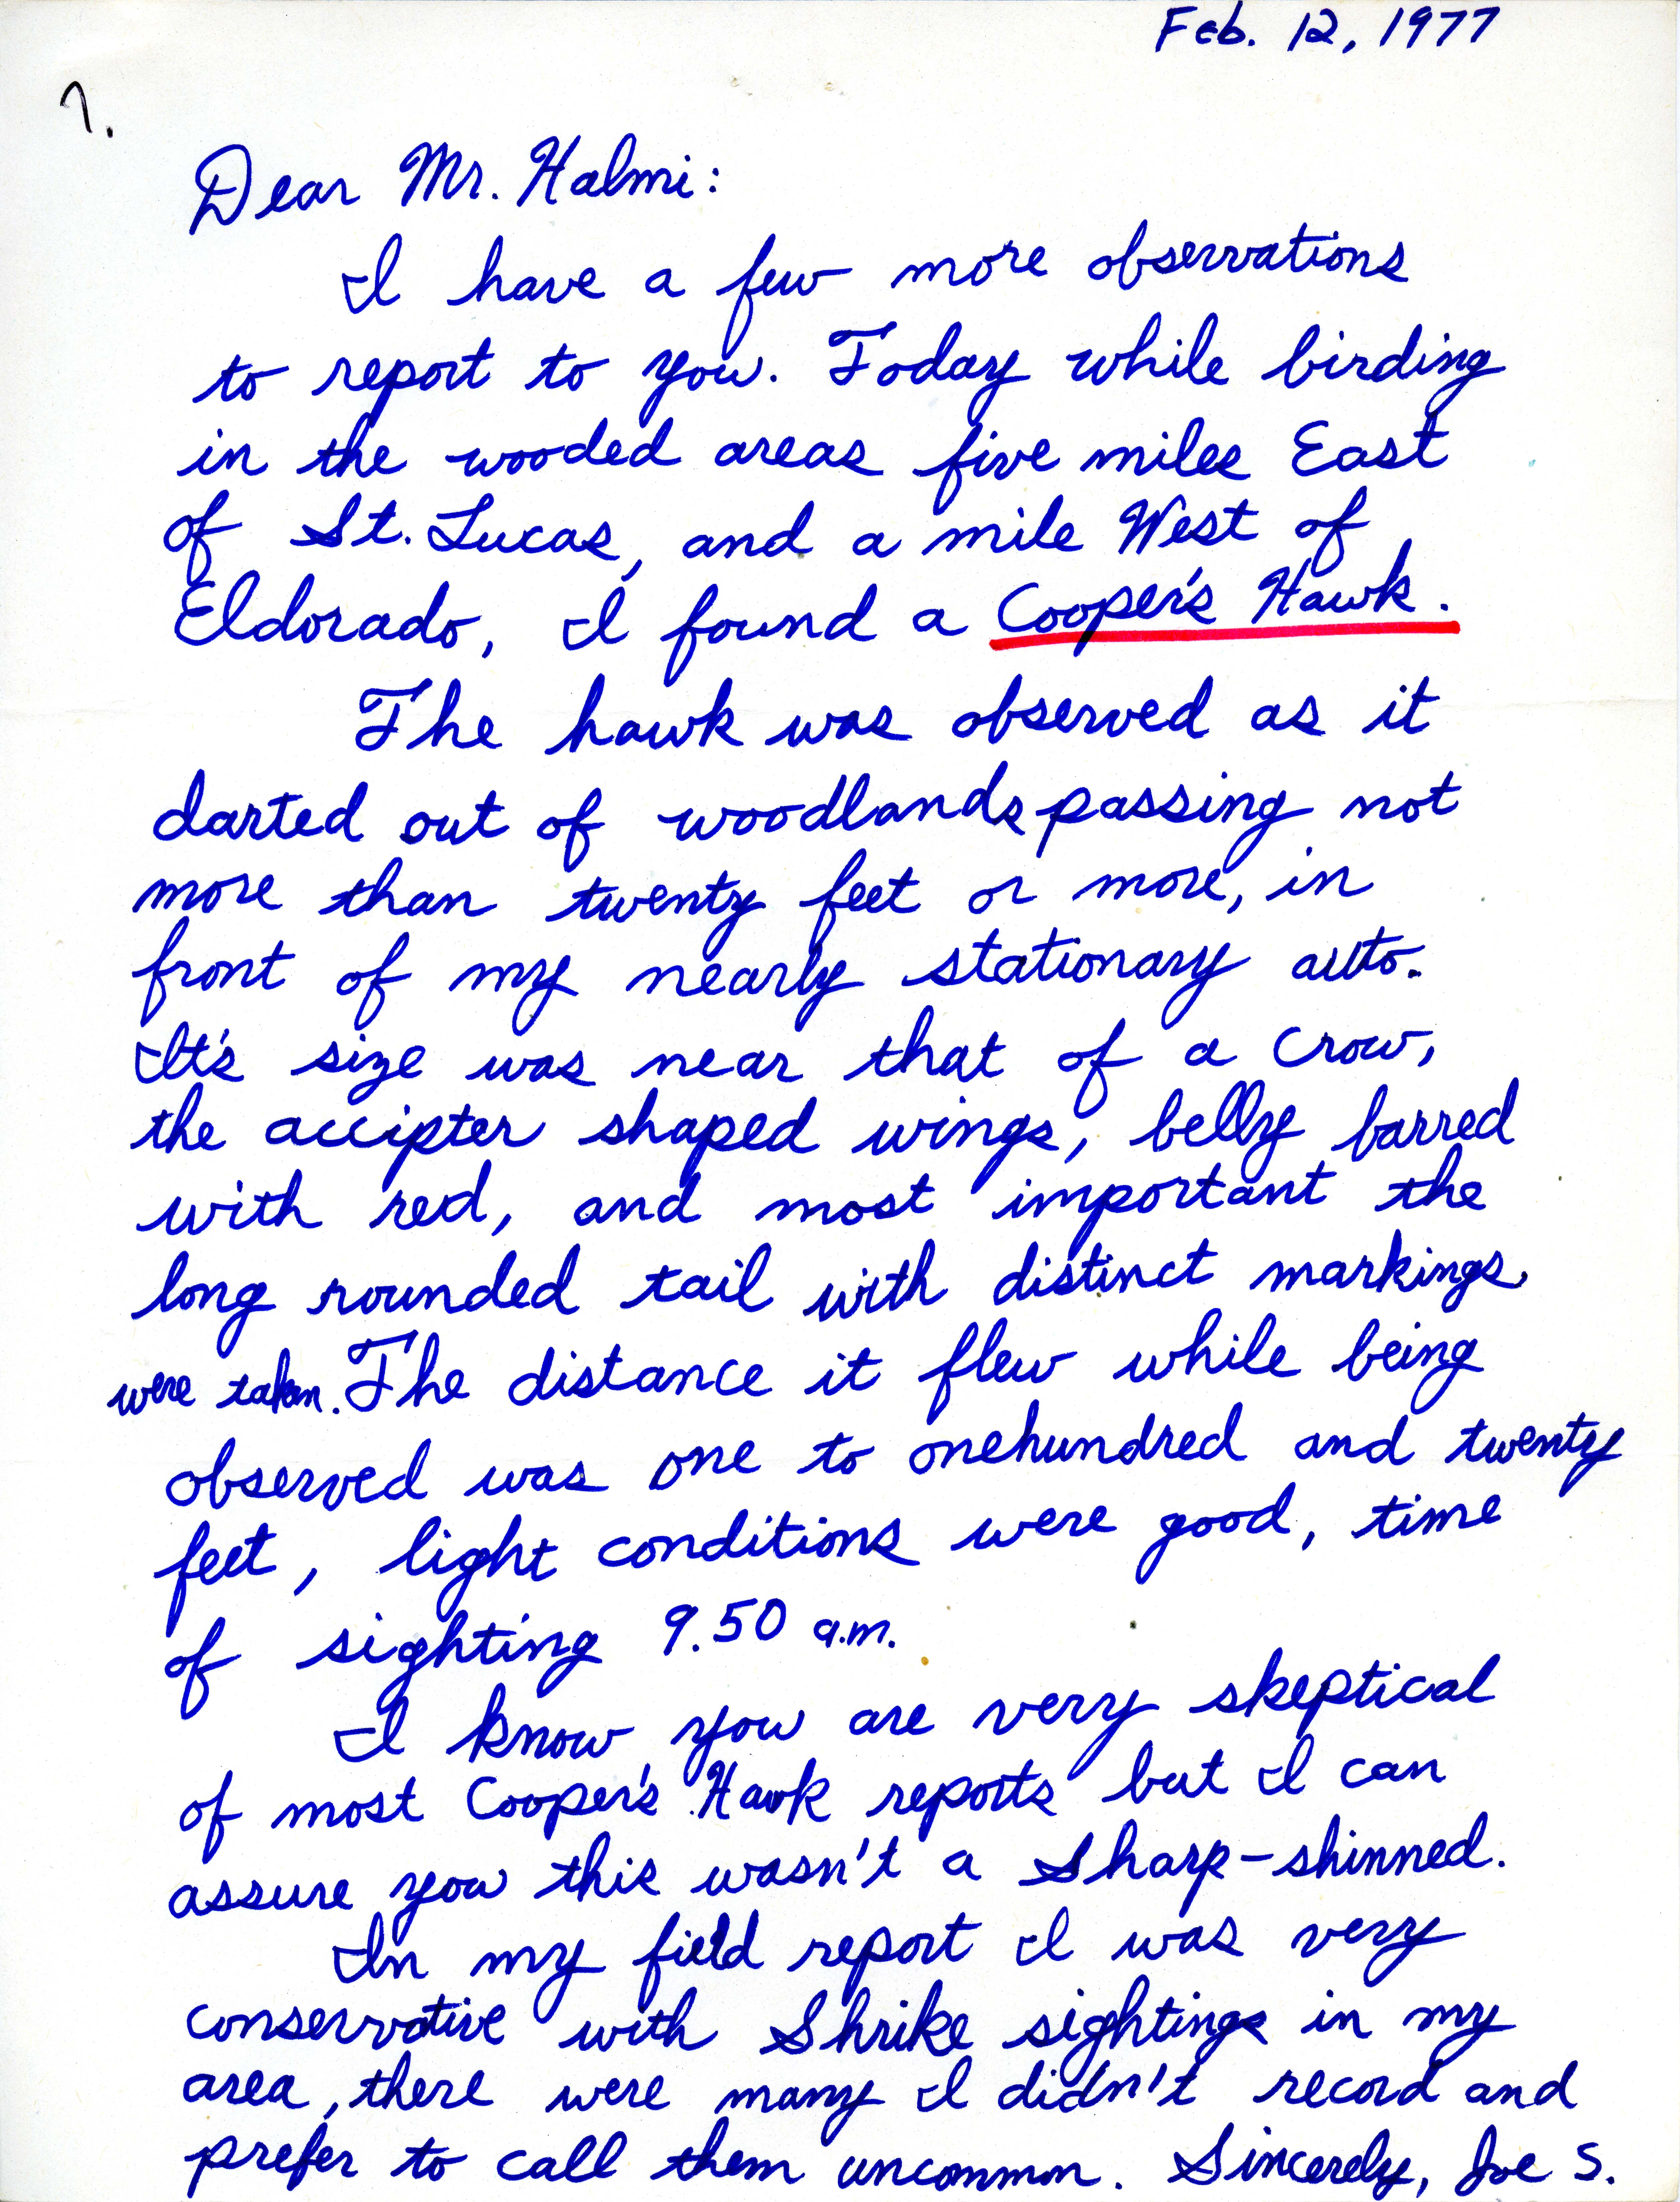 Joe Schaufenbuel letter to Nicholas S. Halmi regarding a Cooper's Hawk sighting, February 12, 1977